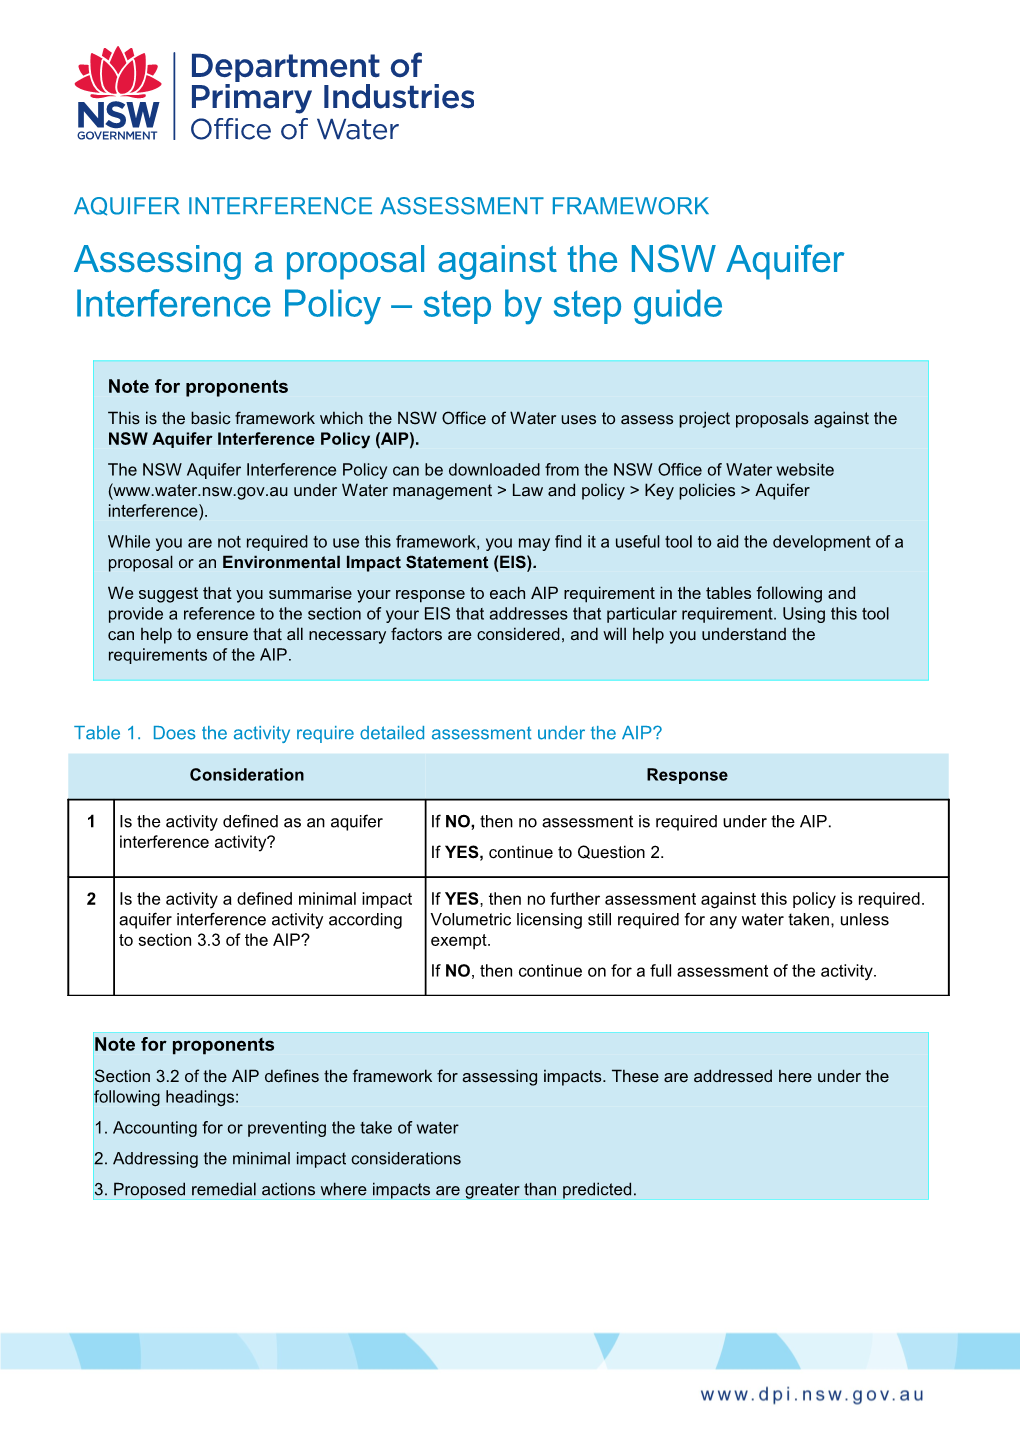 Aquifer Interference Assessment Framework - Assessing a Proposal Against the NSW Aquifer